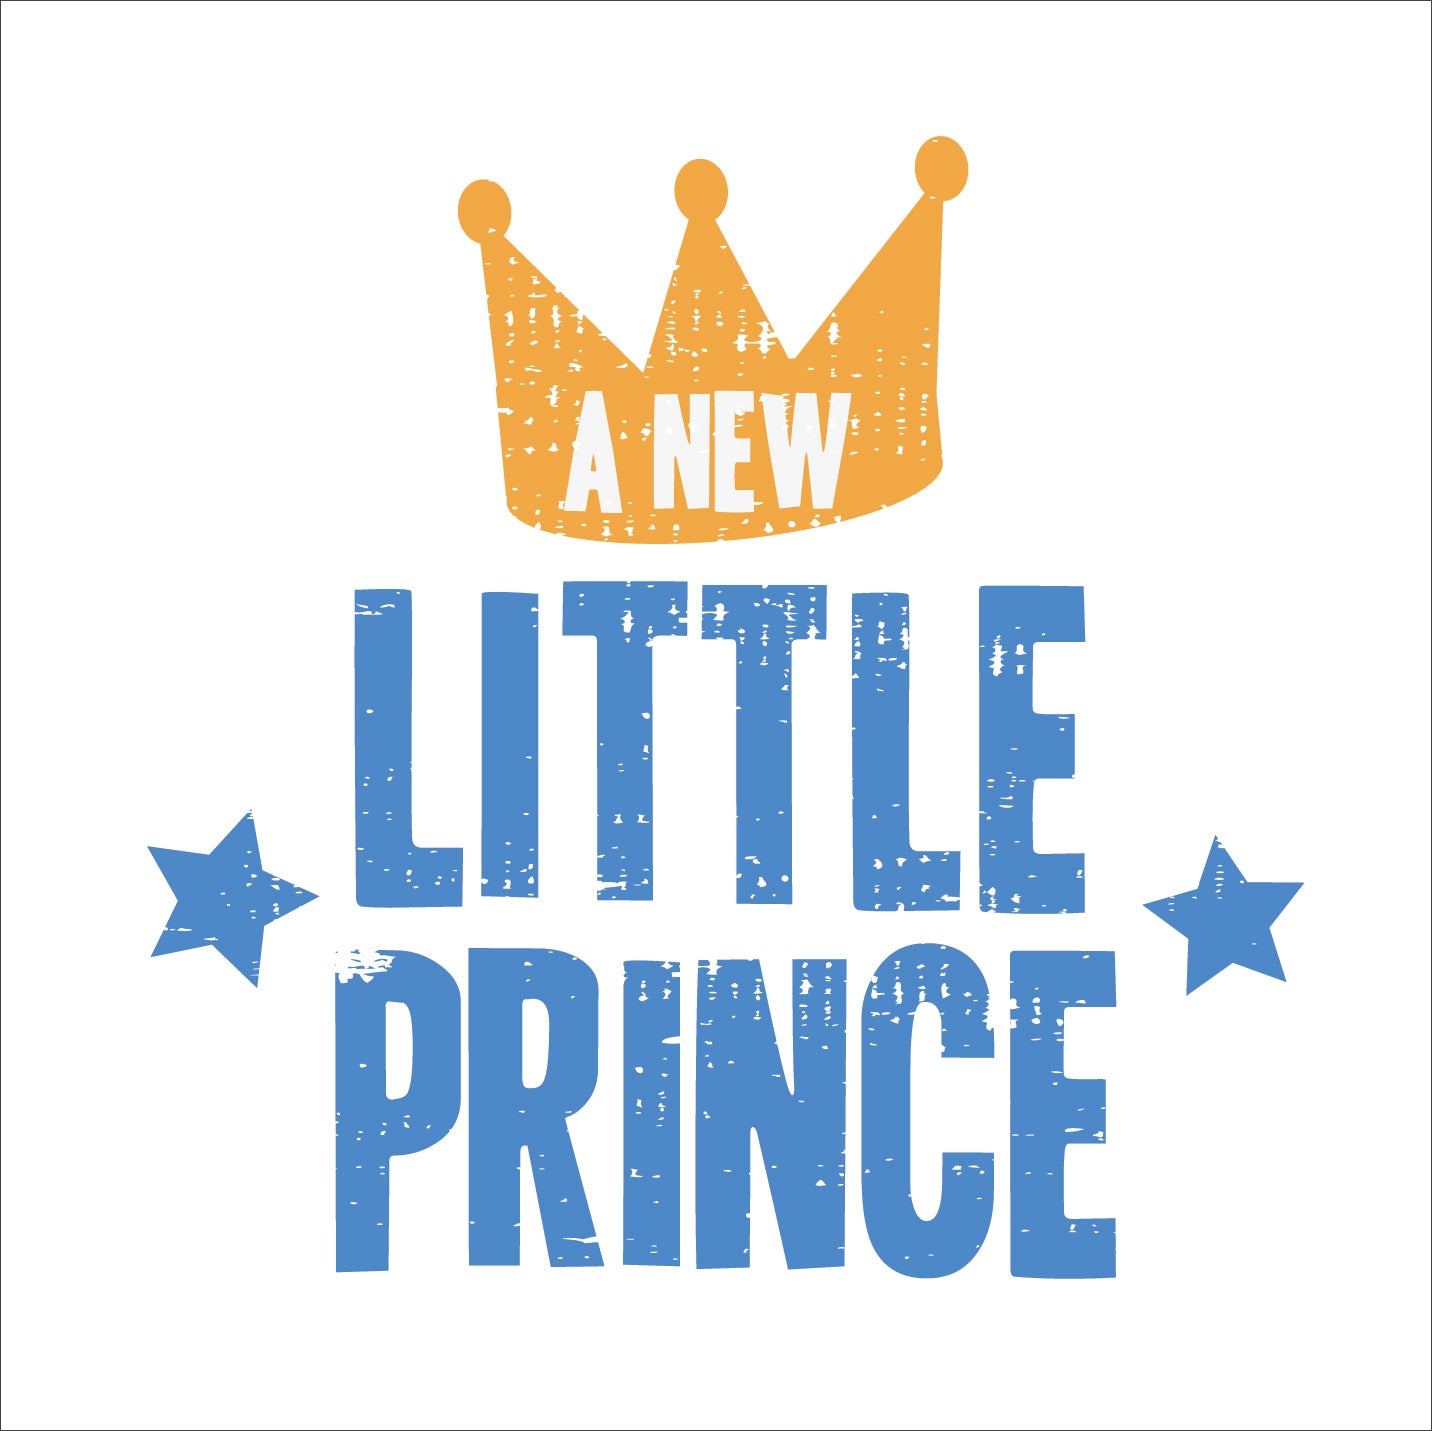 Little PrinceLittle Prince